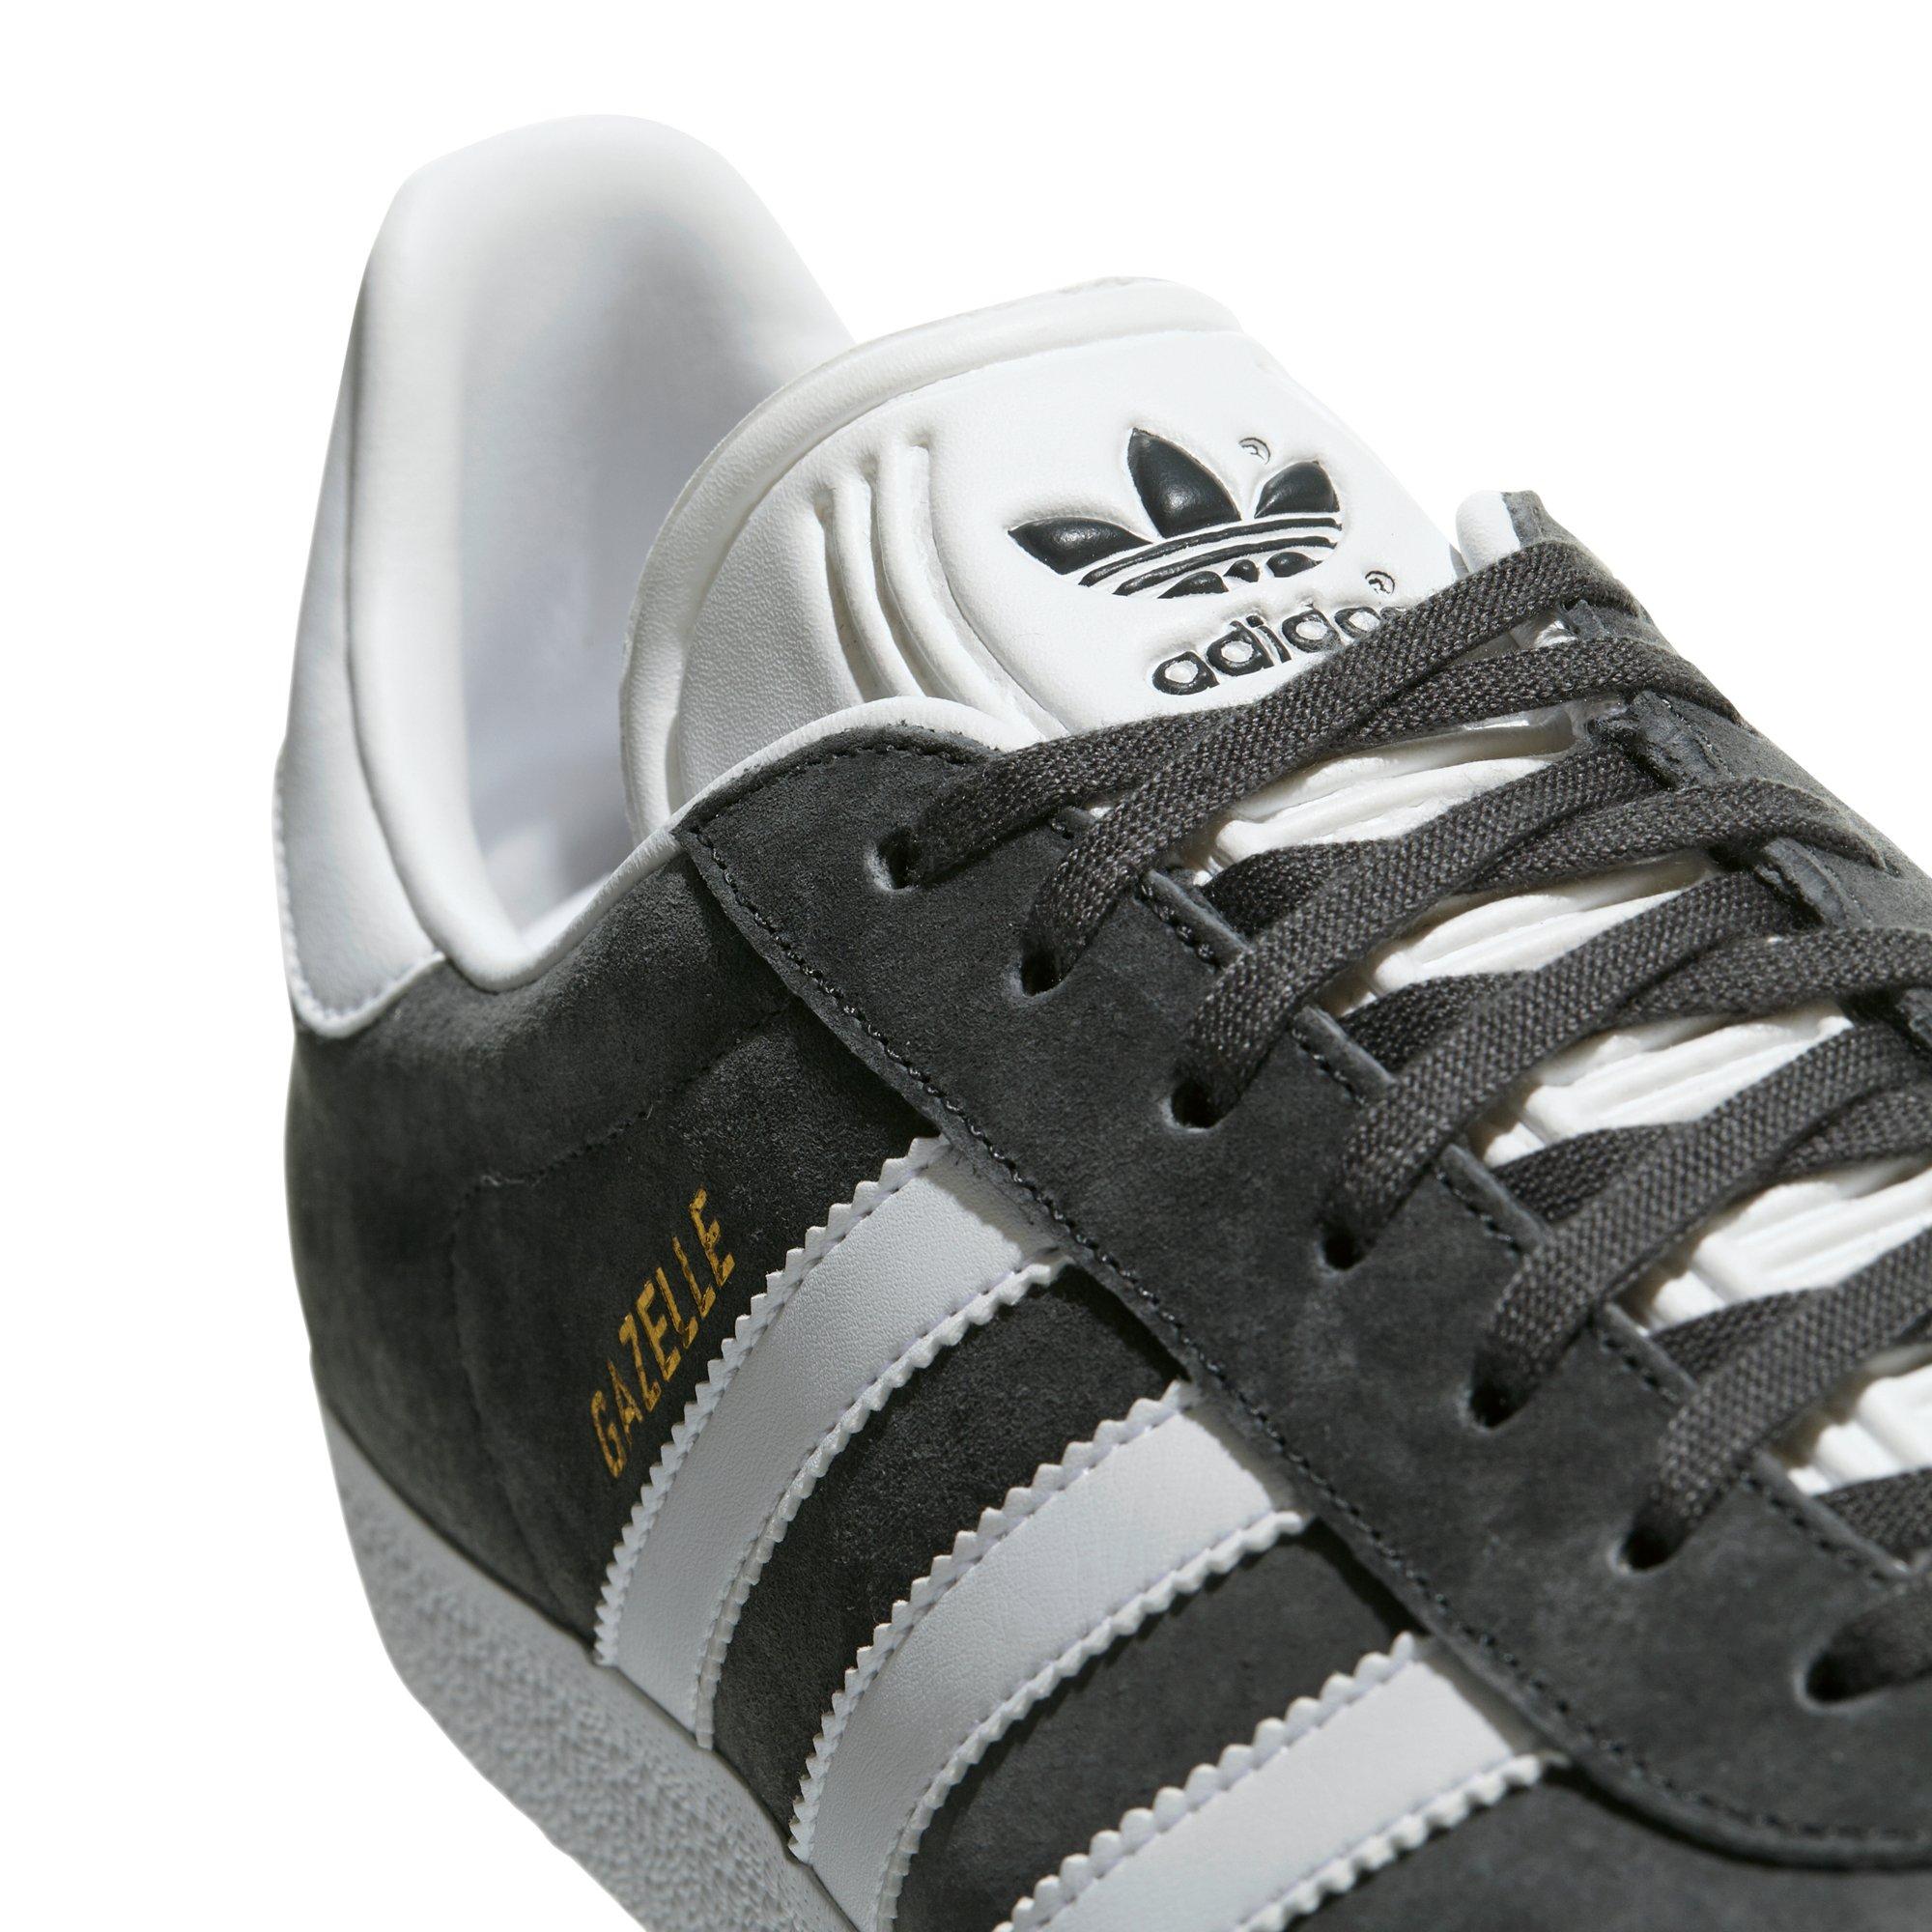 adidas Originals Gazelle "Dgh Solid Grey/White/Gold Shoe